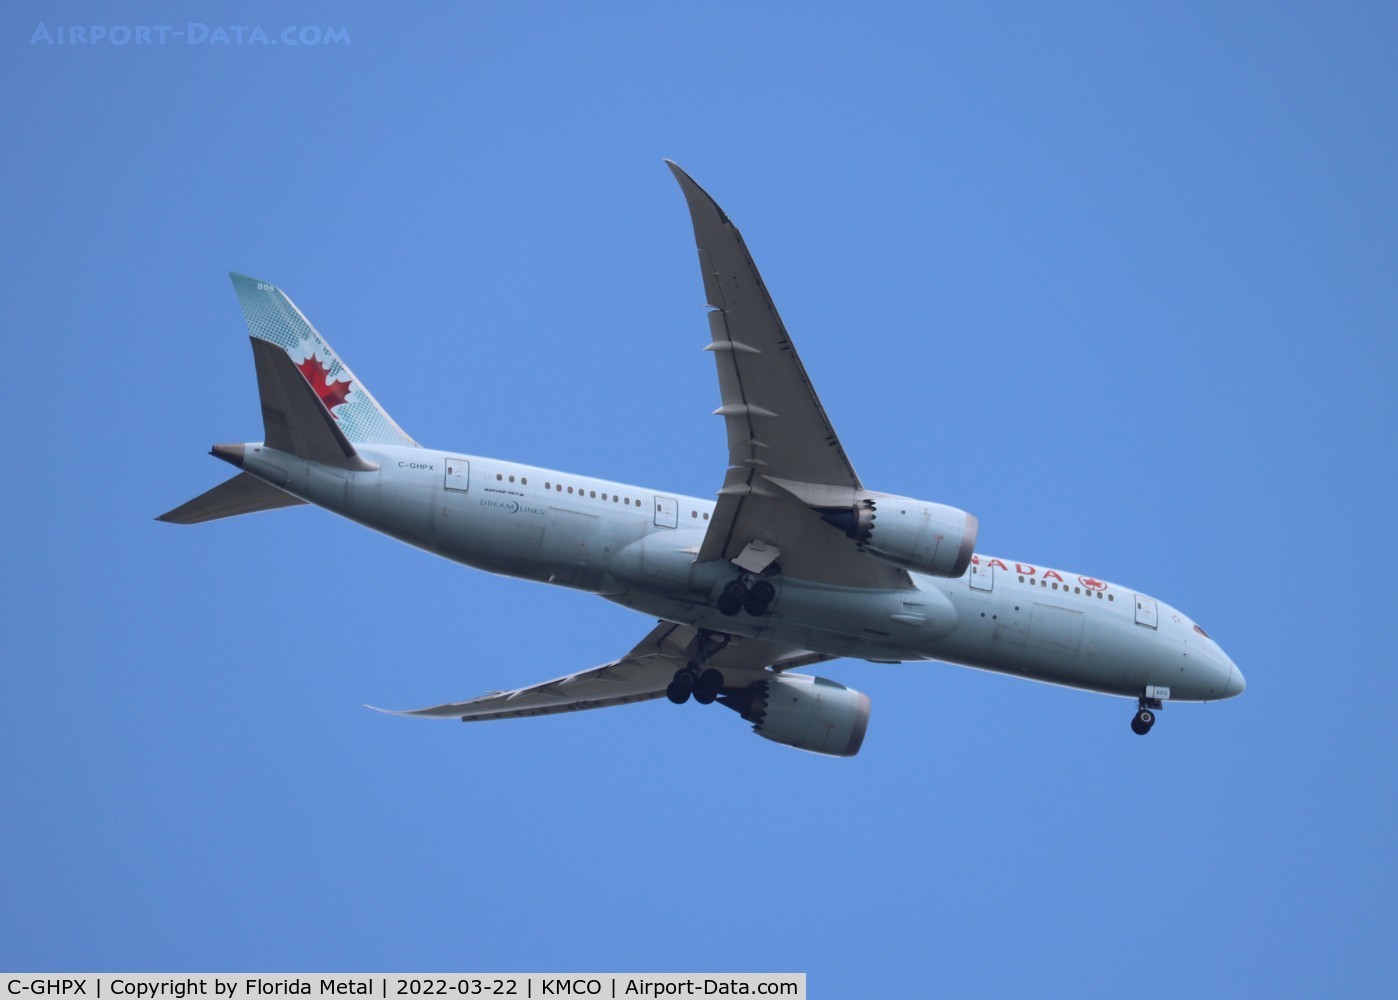 C-GHPX, 2014 Boeing 787-8 Dreamliner C/N 35261, Air Canada 788 zx